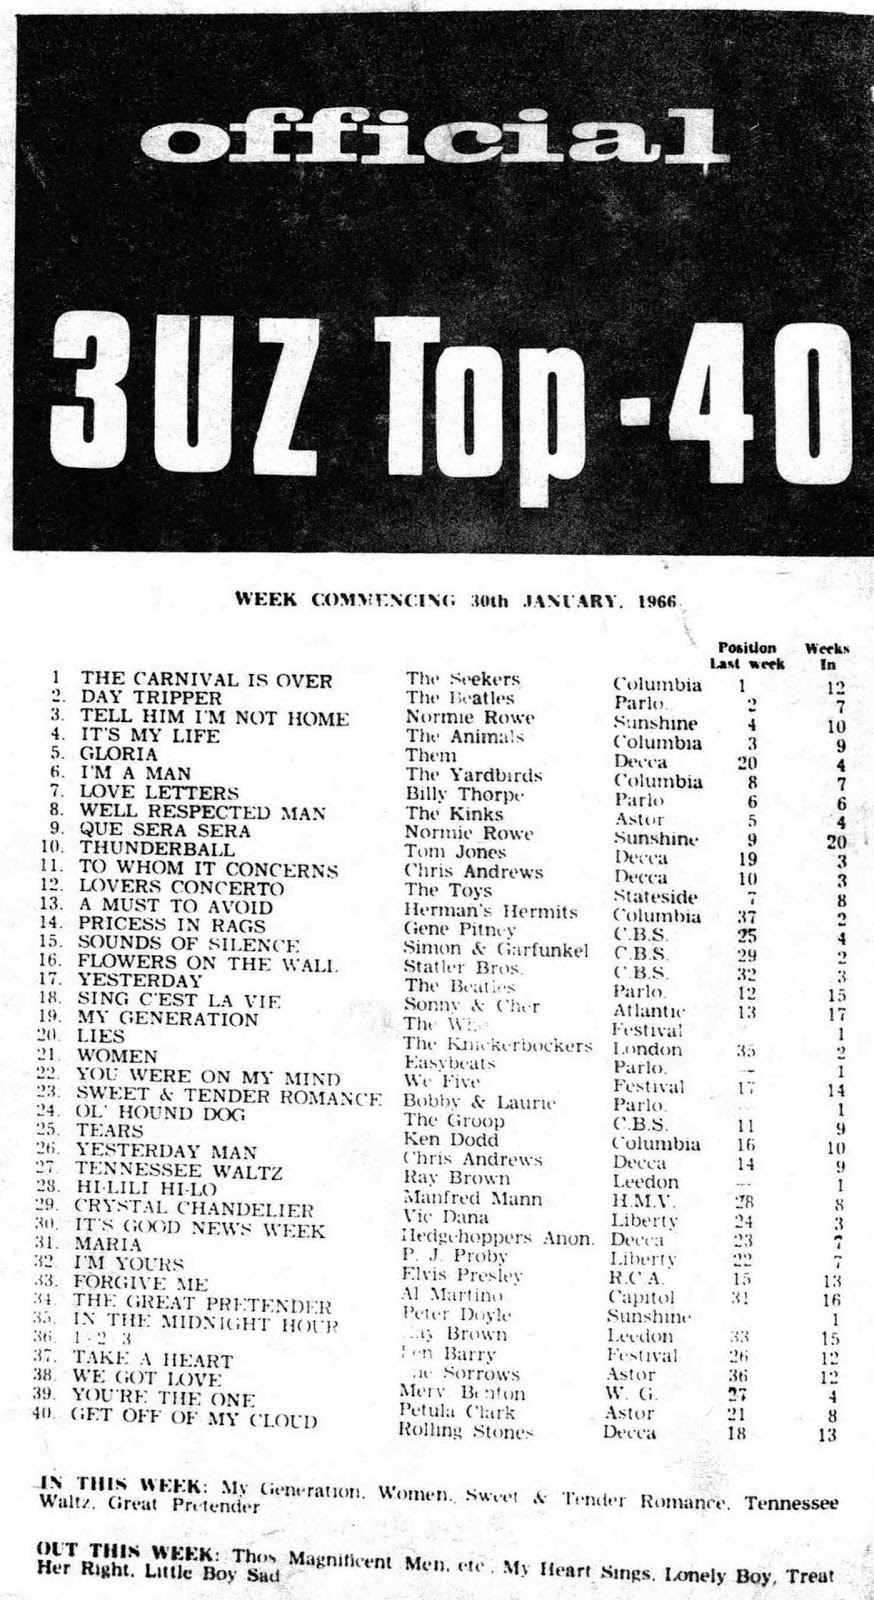 Charts 2011 Top 40